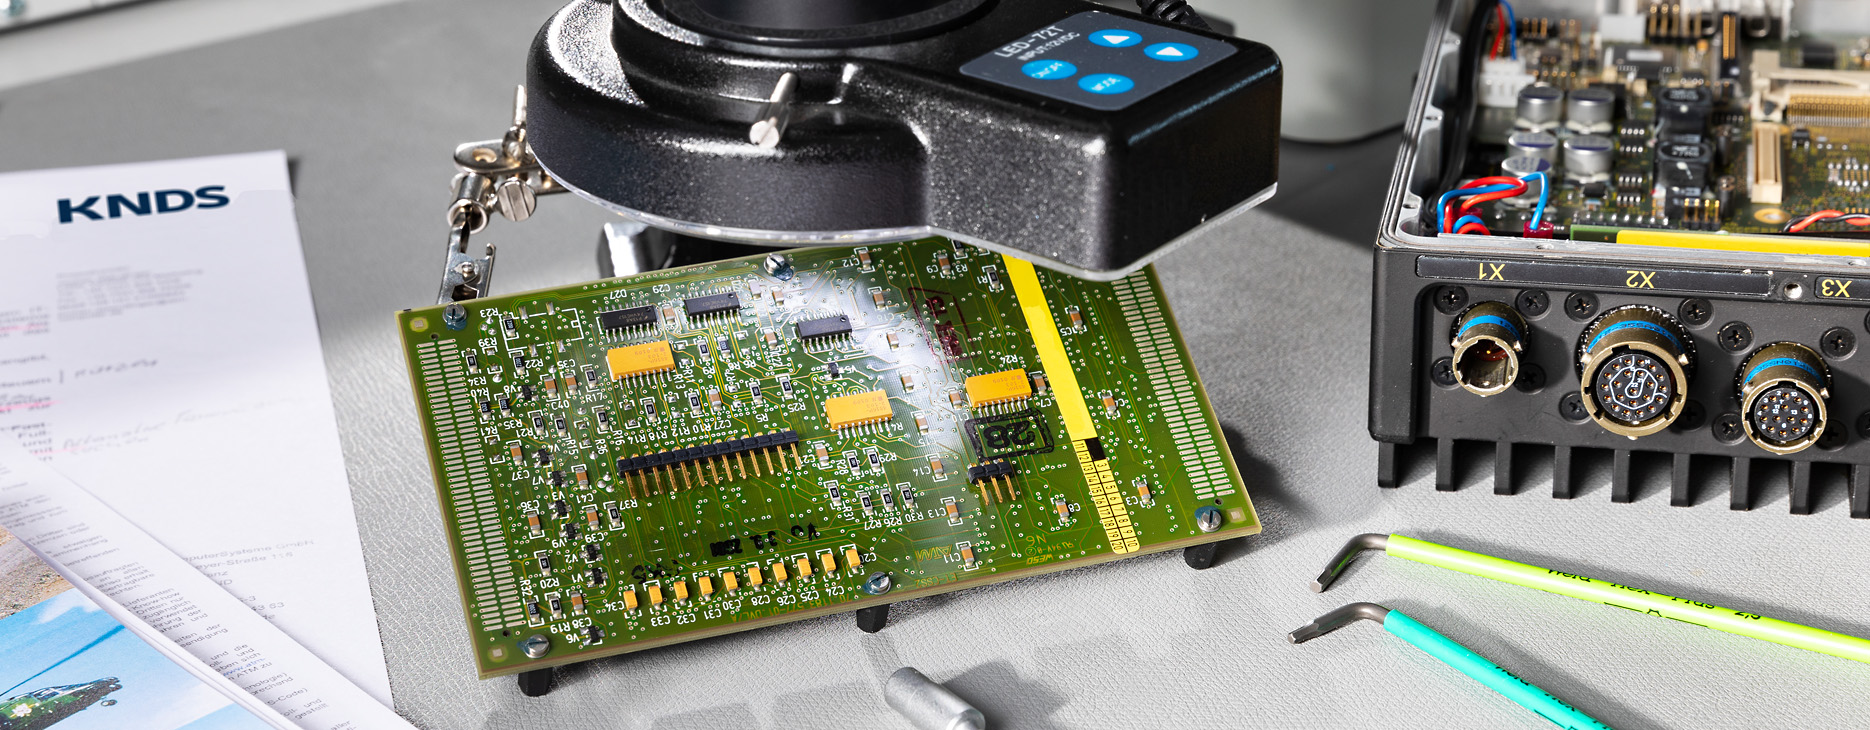 Circuit board under a microscope